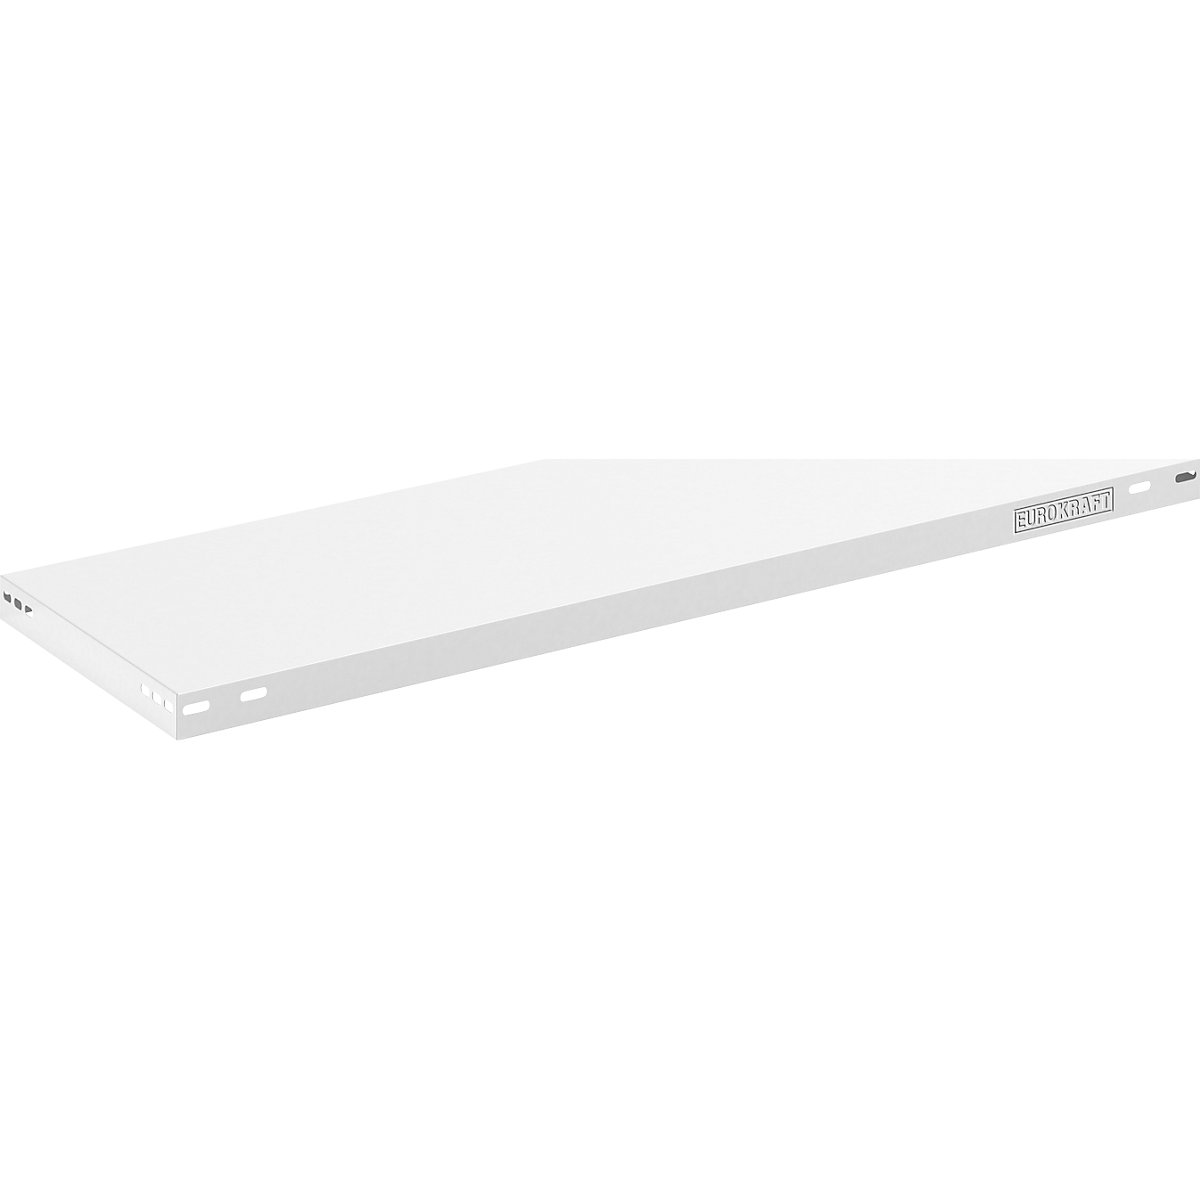 Shelf – eurokraft pro, light grey, medium duty, WxD 1000 x 400 mm